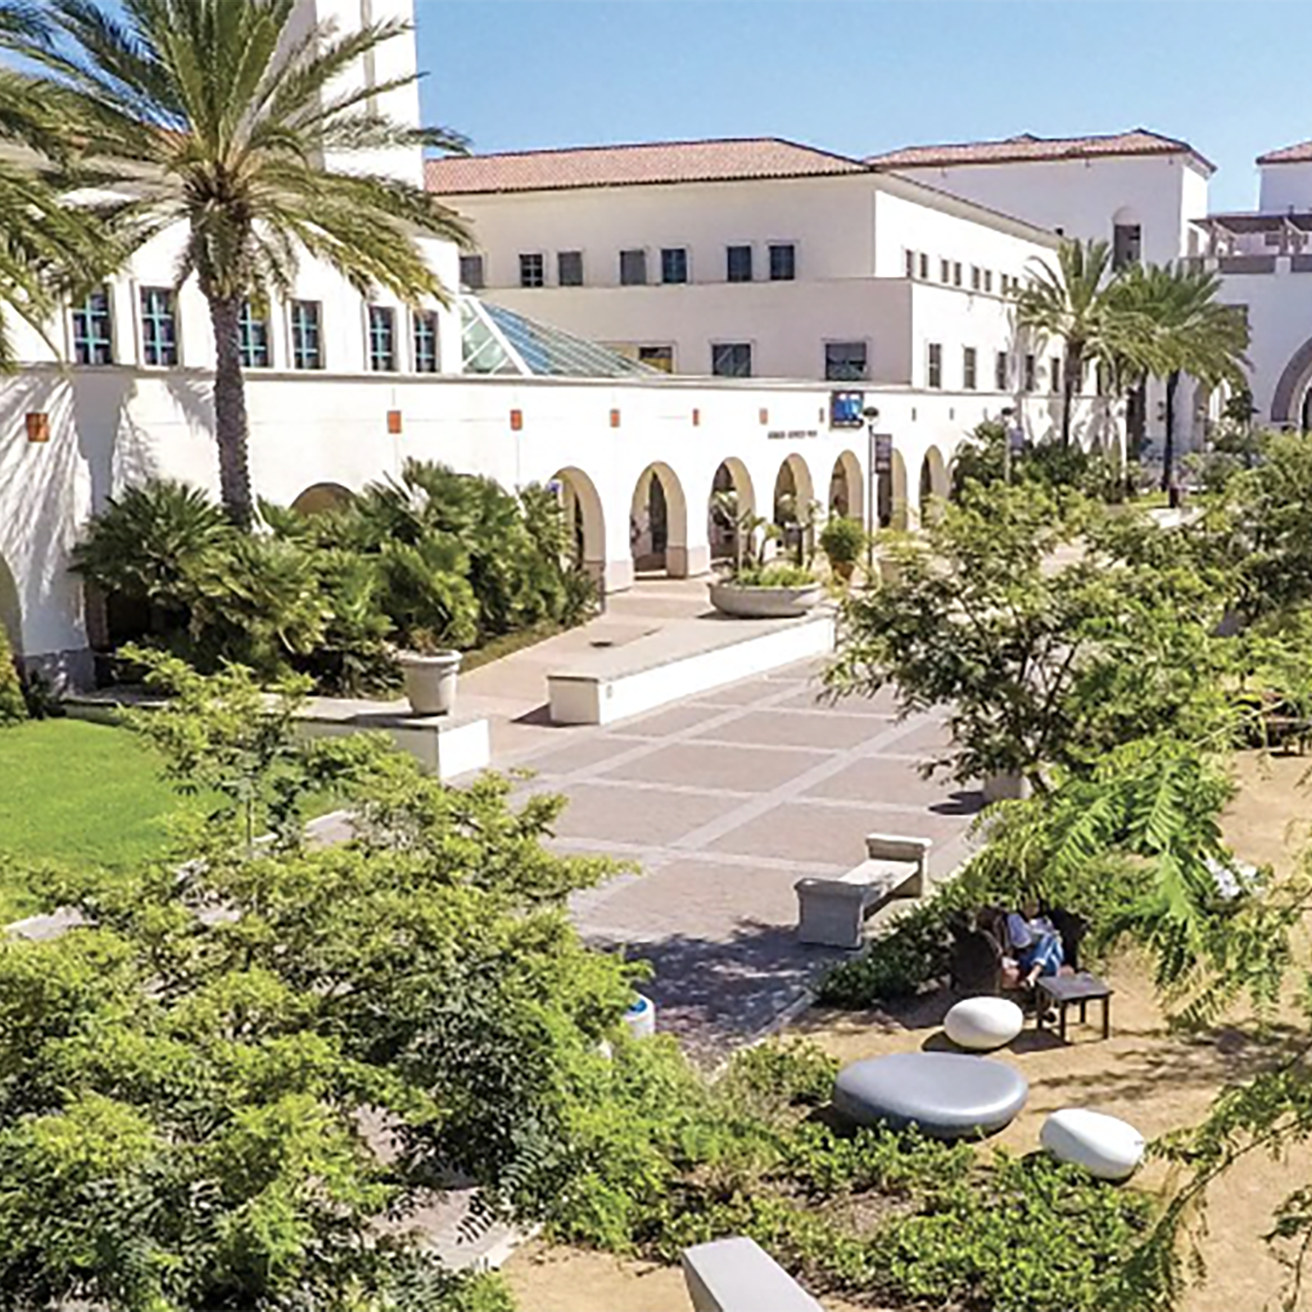 San Diego State University campus